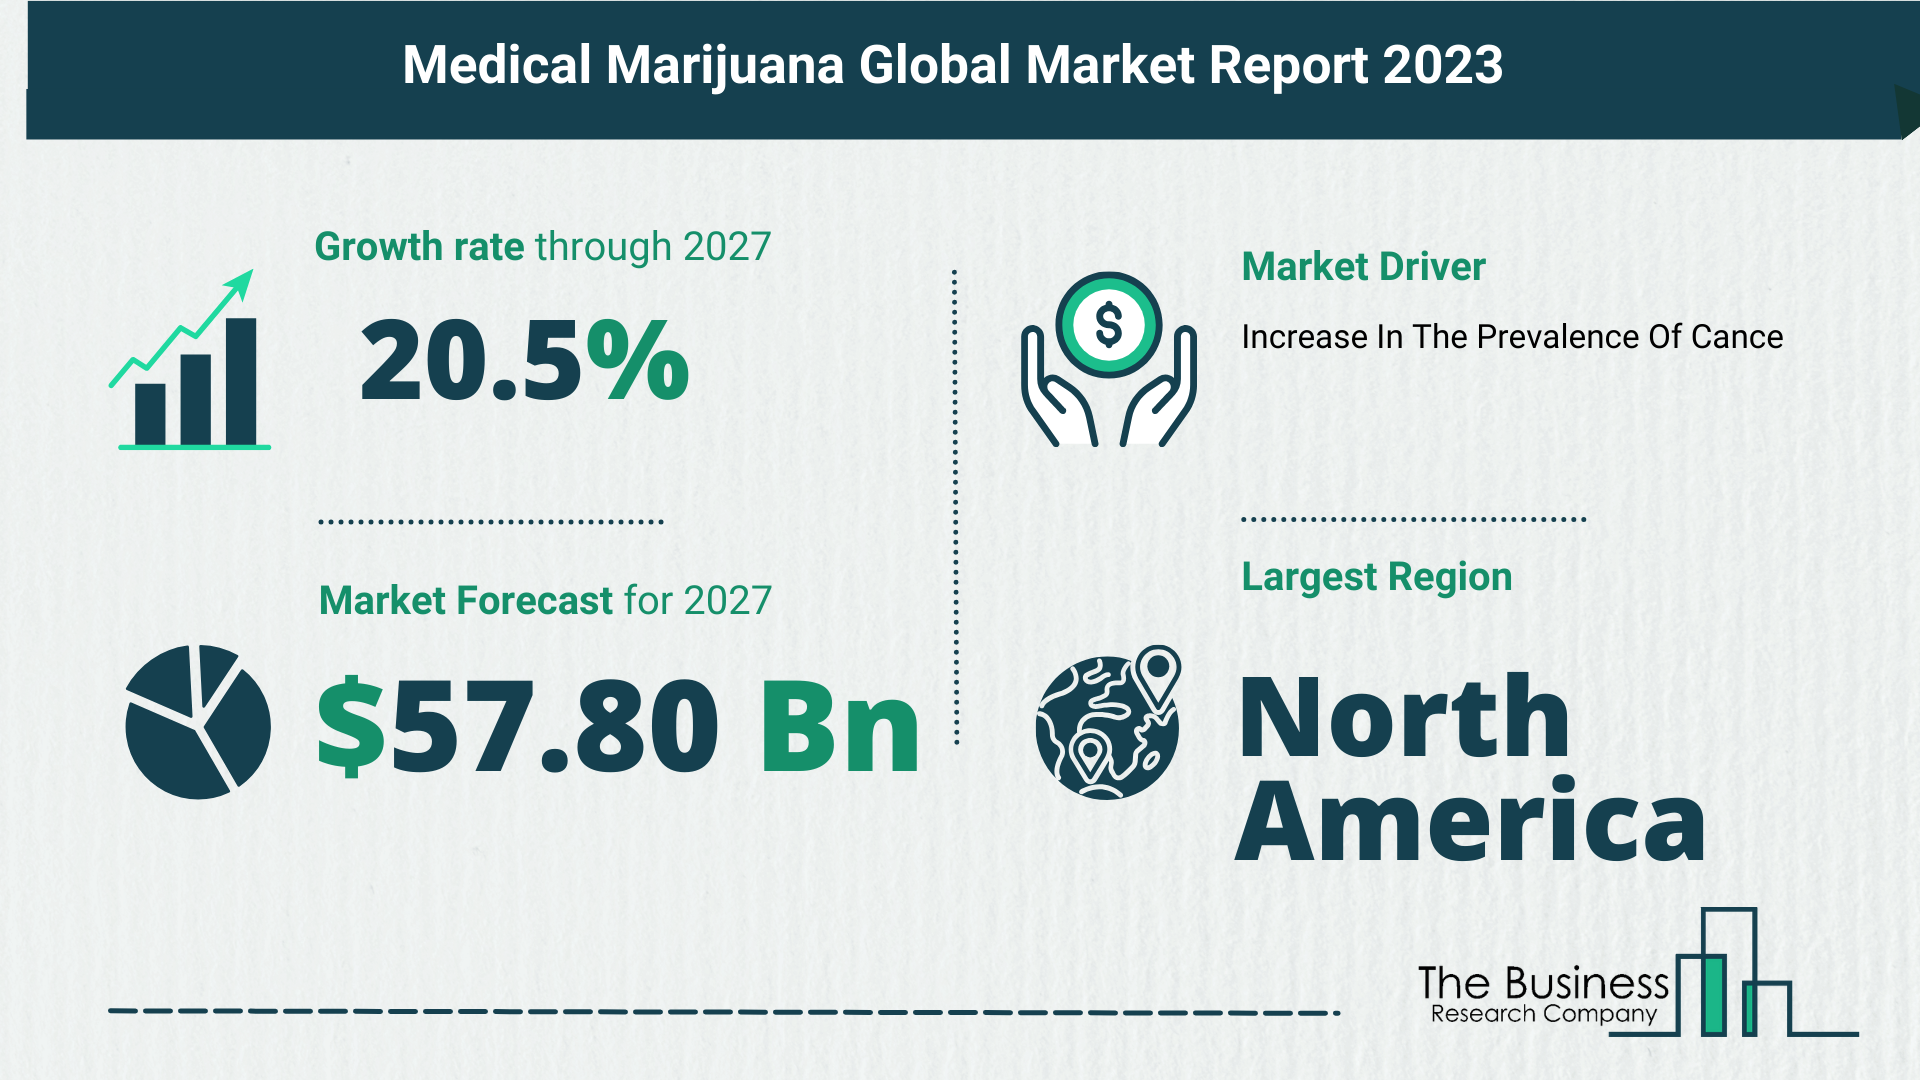 Top 5 Insights From The Medical Marijuana Market Report 2023